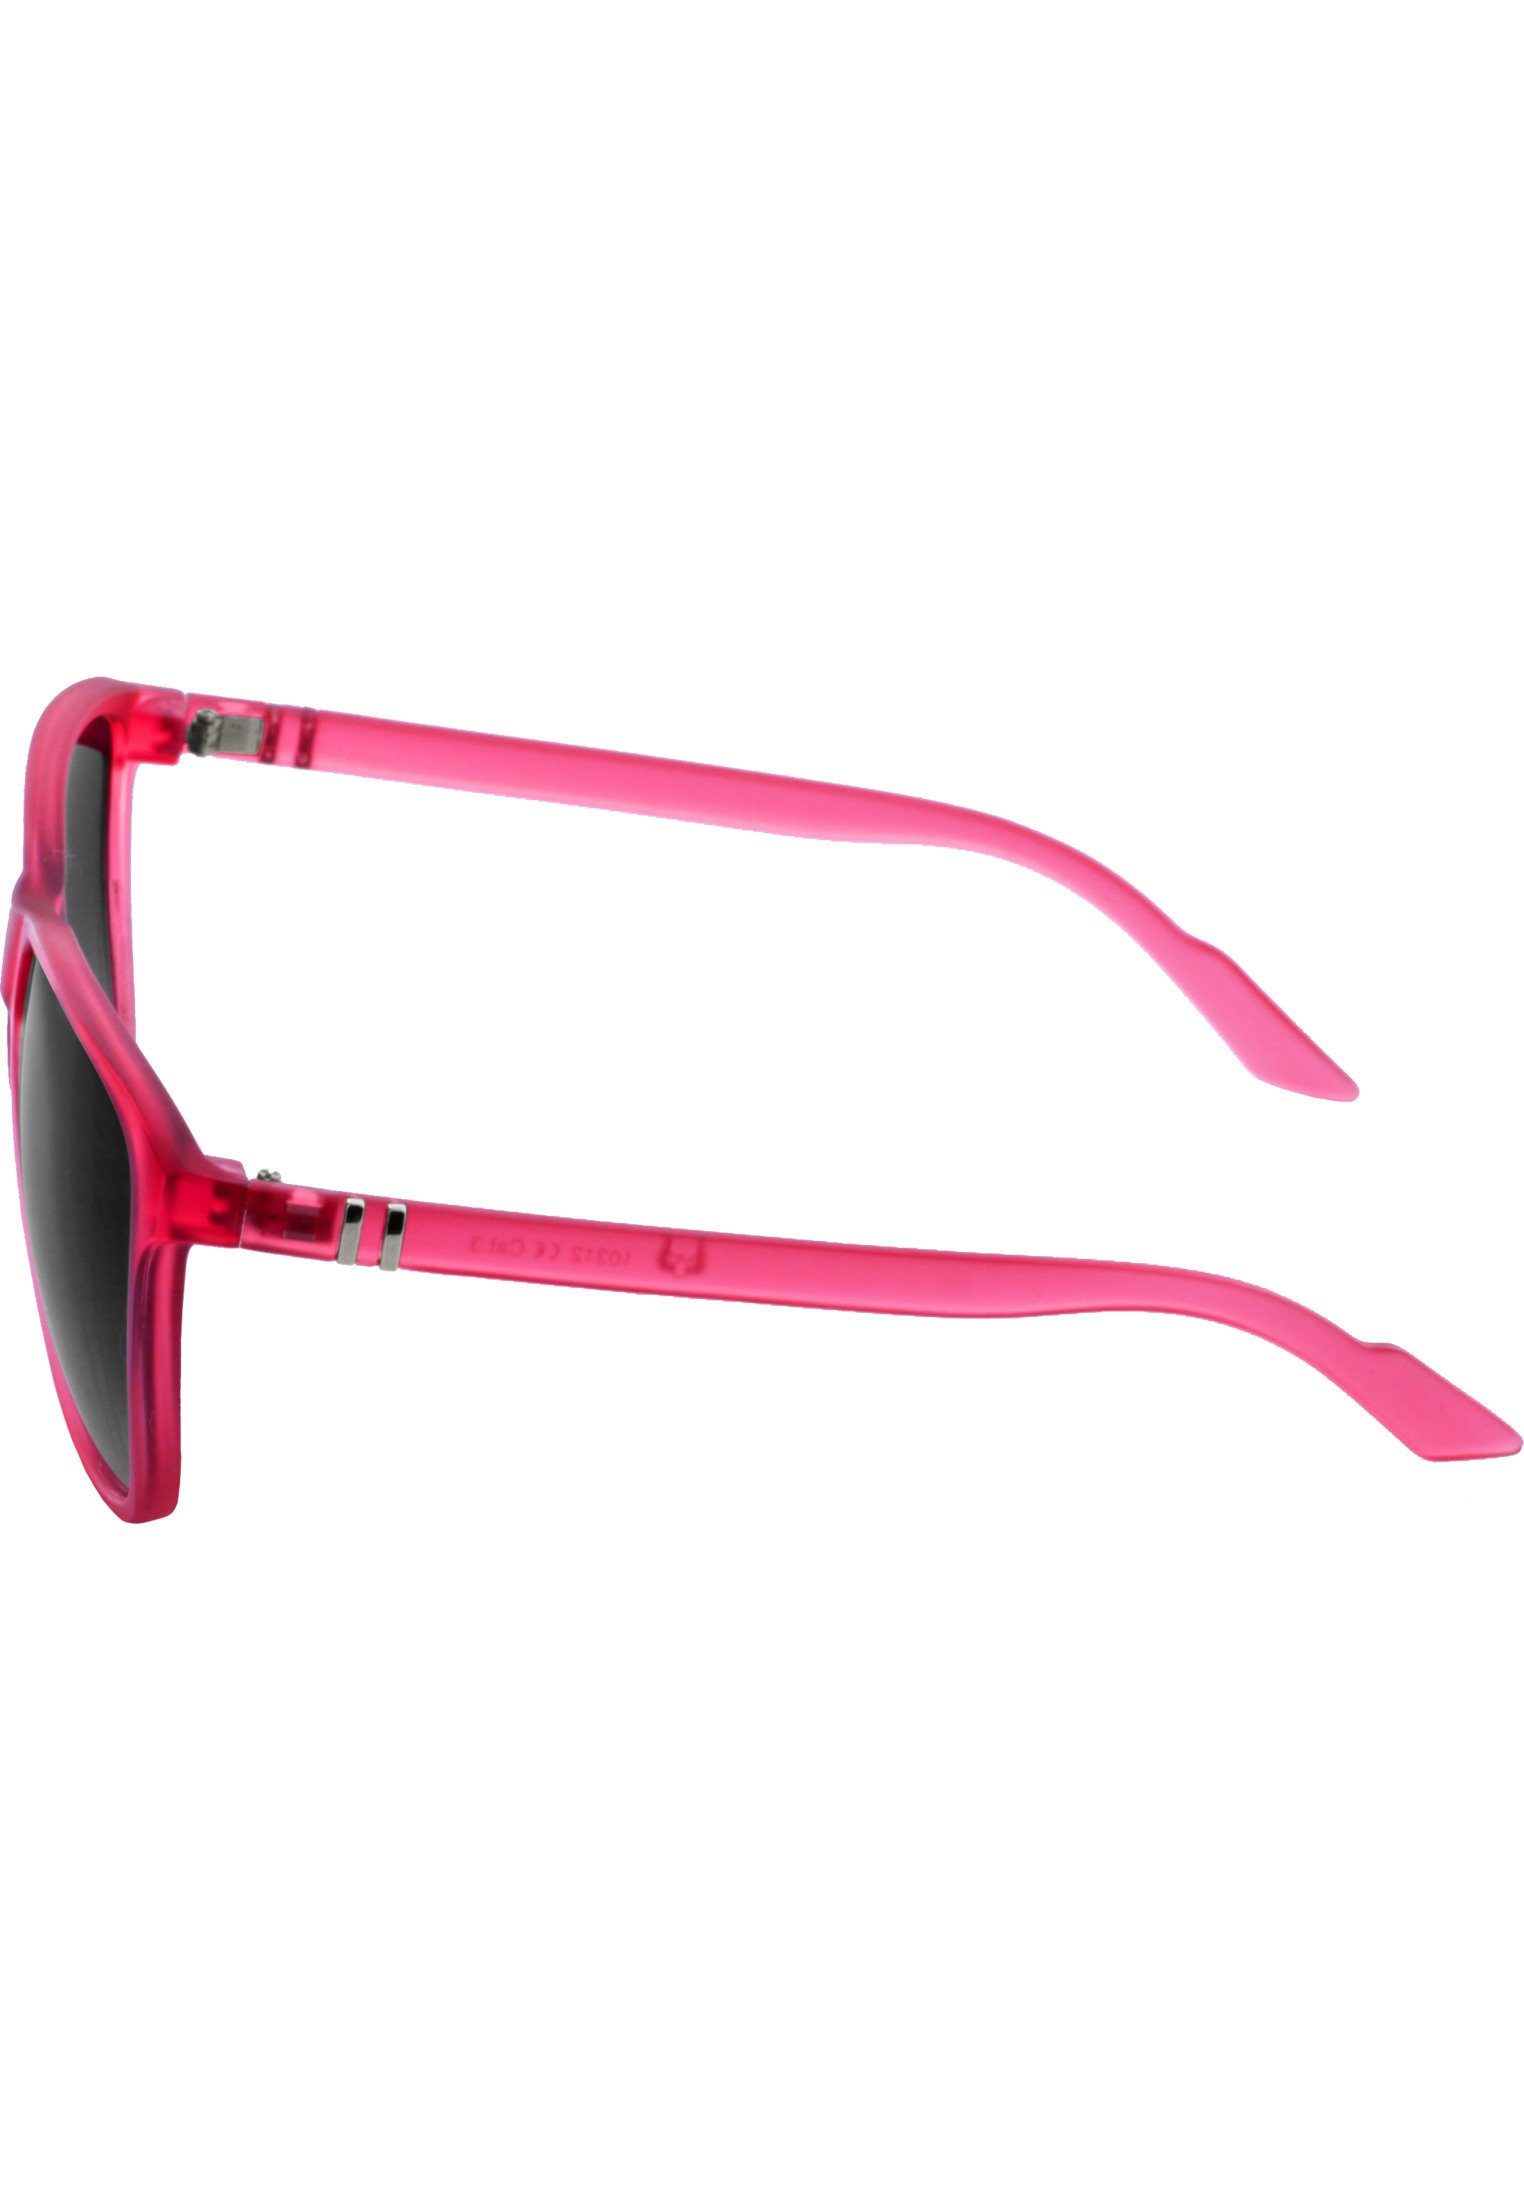 MSTRDS Sonnenbrille Accessoires Chirwa Sunglasses neonpink